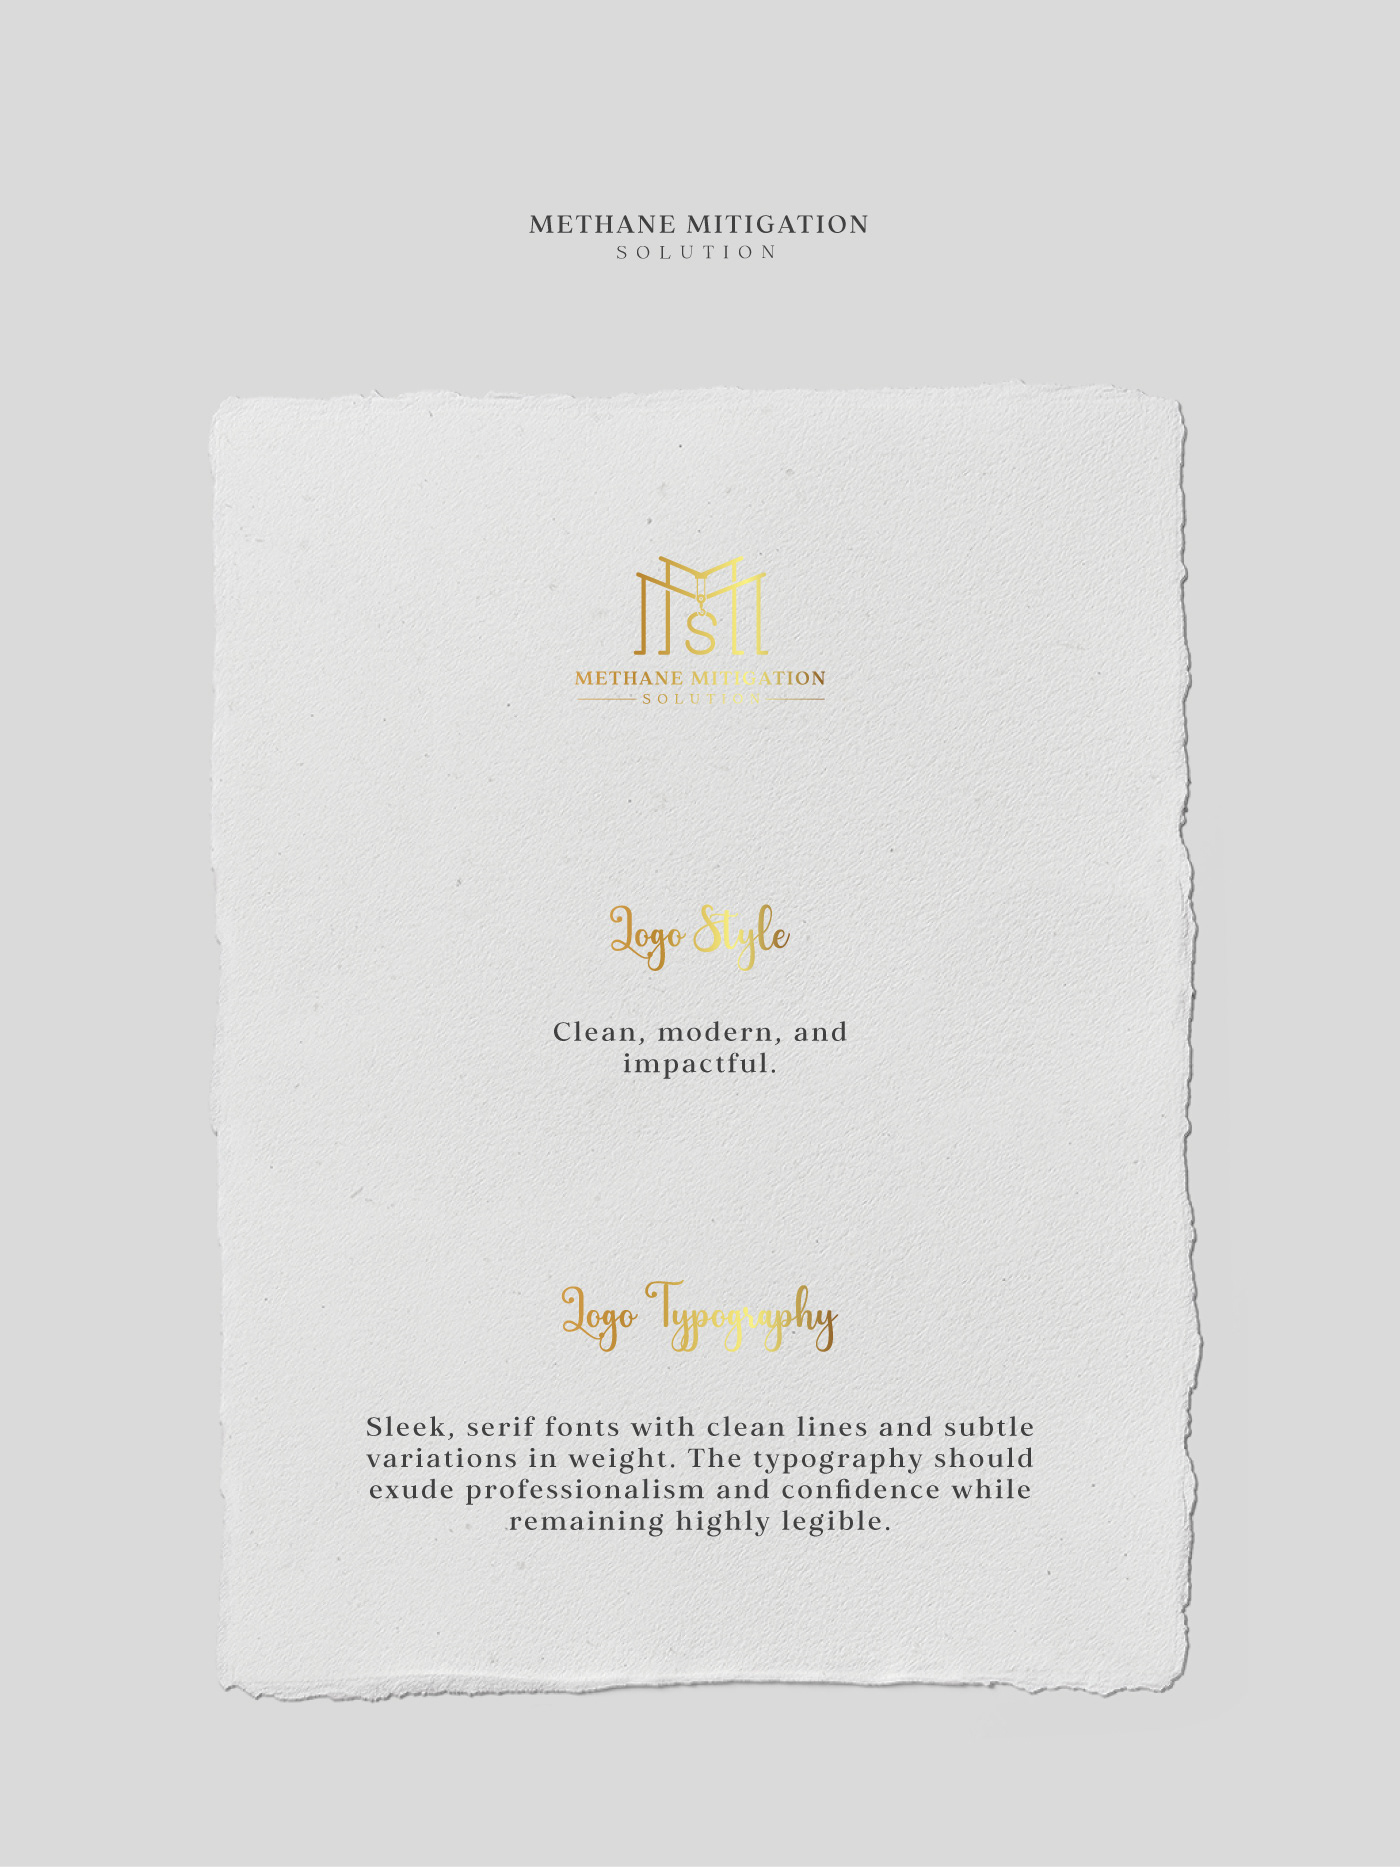 construction luxury luxury logo Luxury Design crane typhography company creative logo brand identity visual